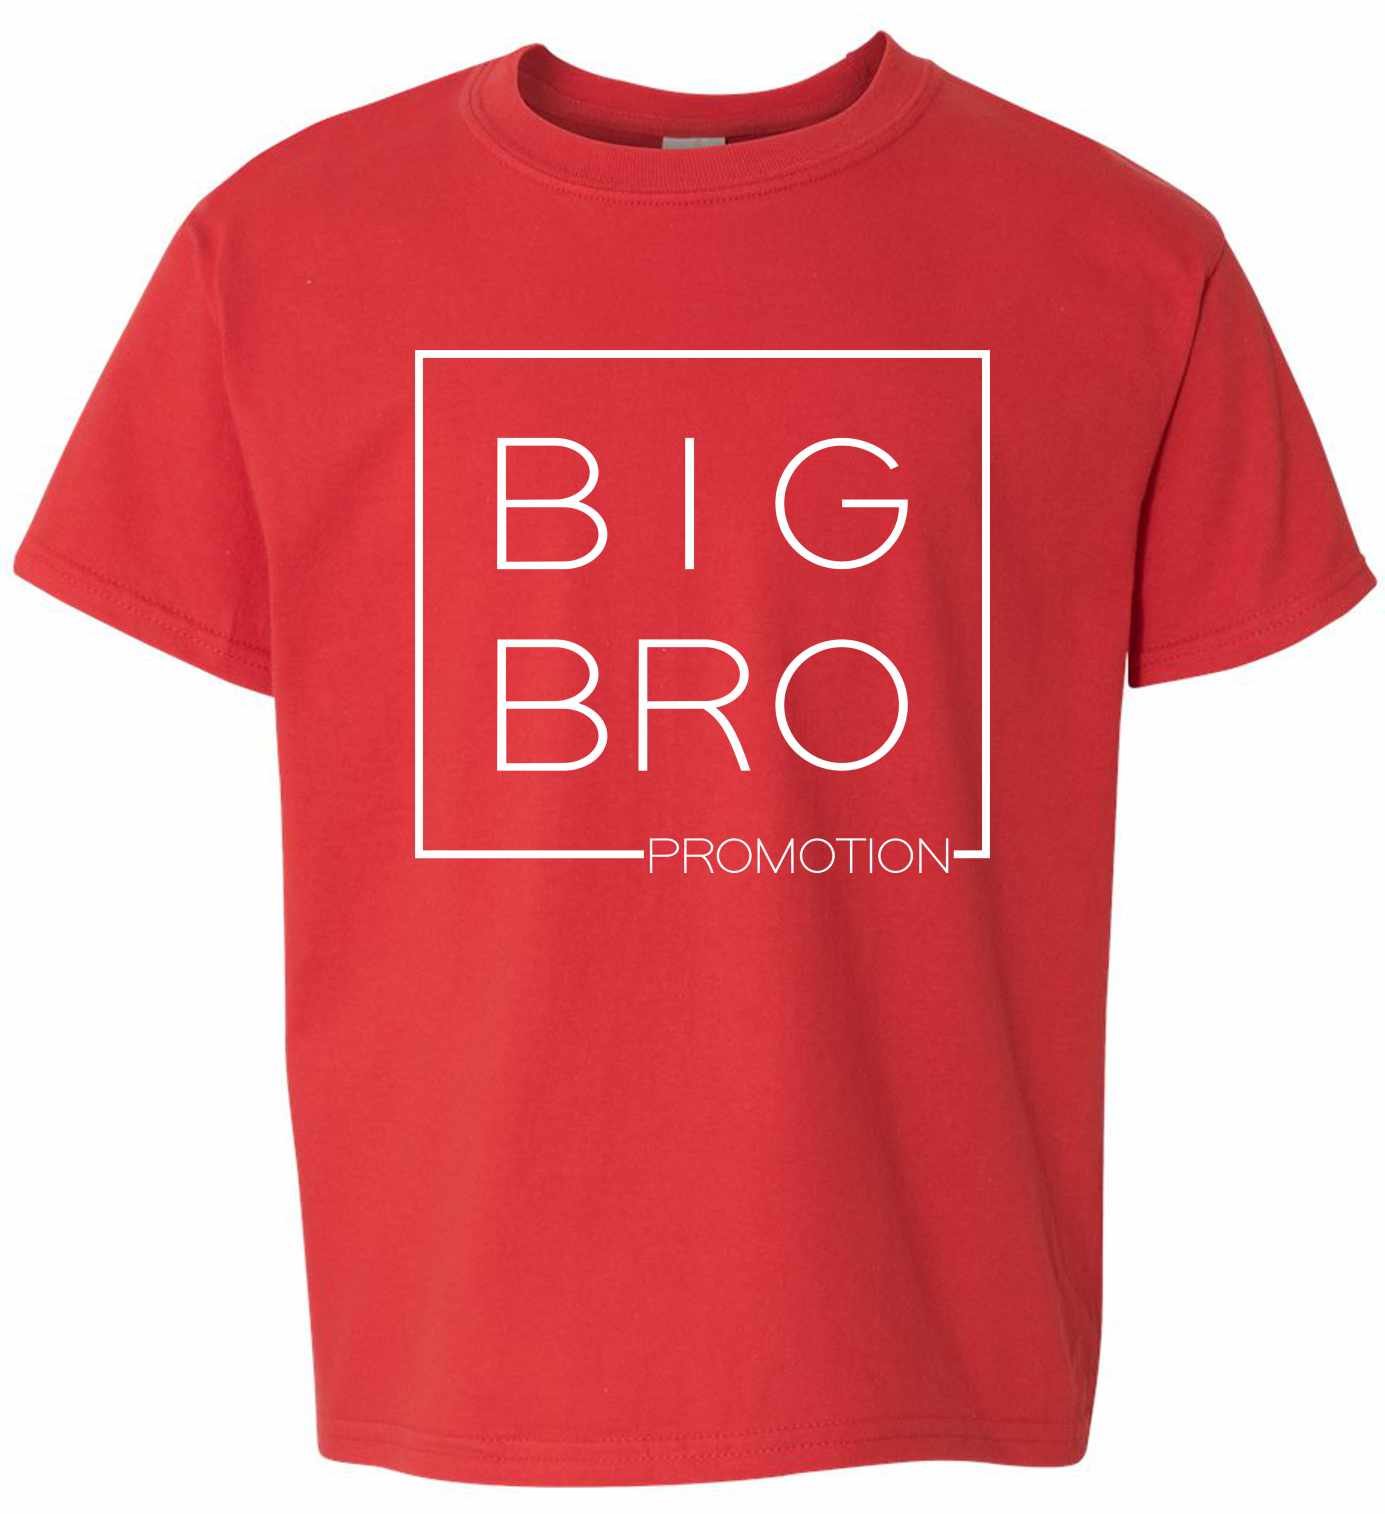 Big Bro Promotion - Big Brother - Box on Kids T-Shirt